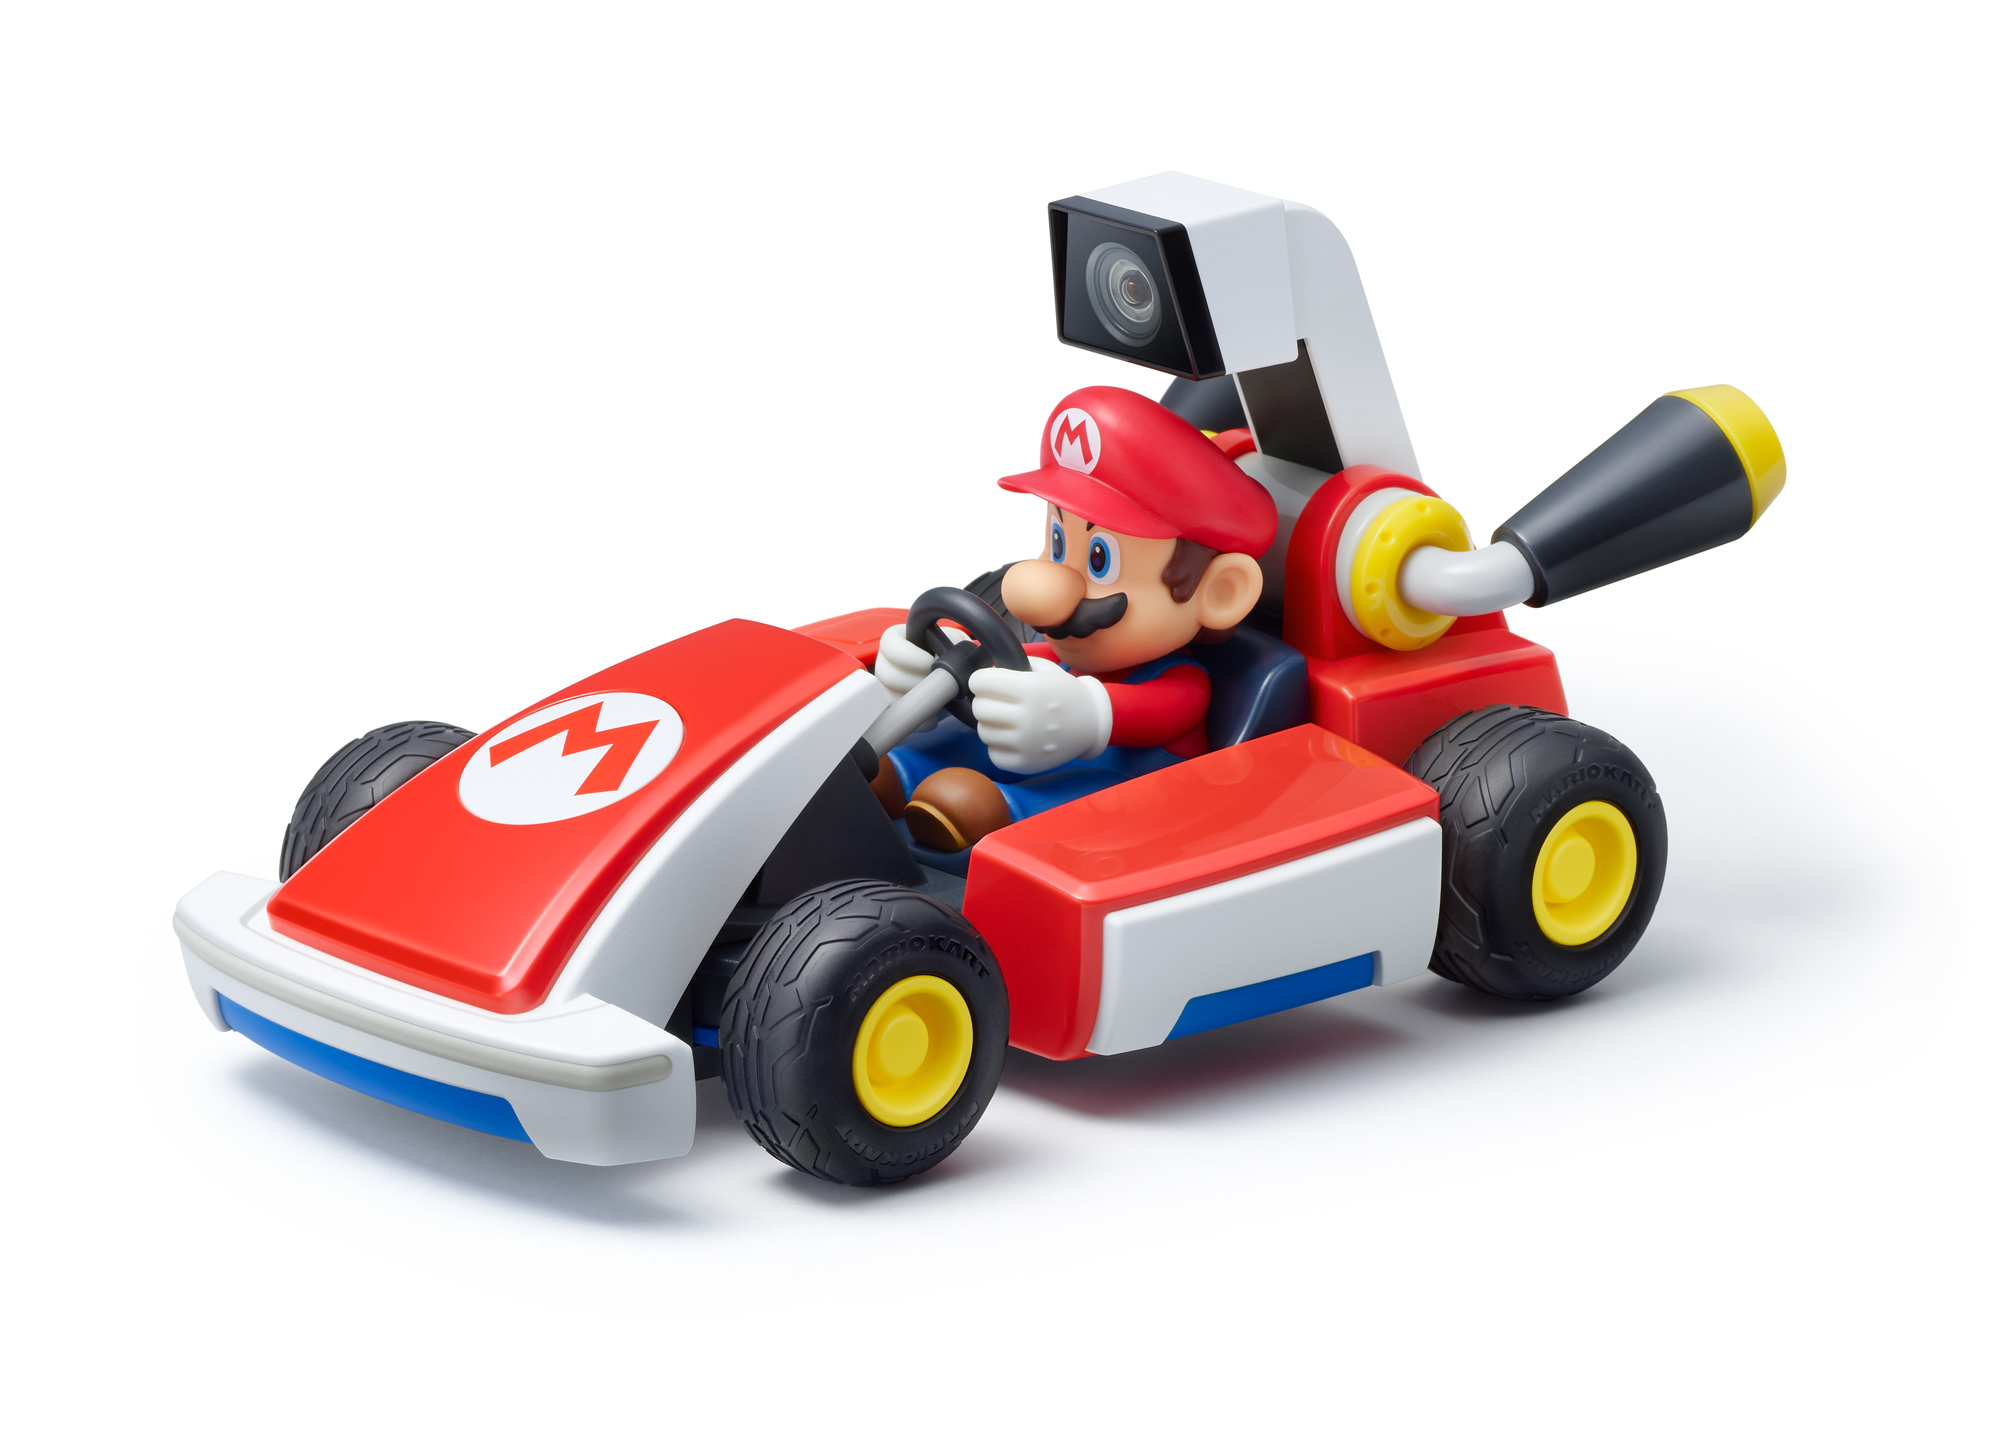 Mario Kart Live Switch Mario Circuit [Nintendo - Home Switch